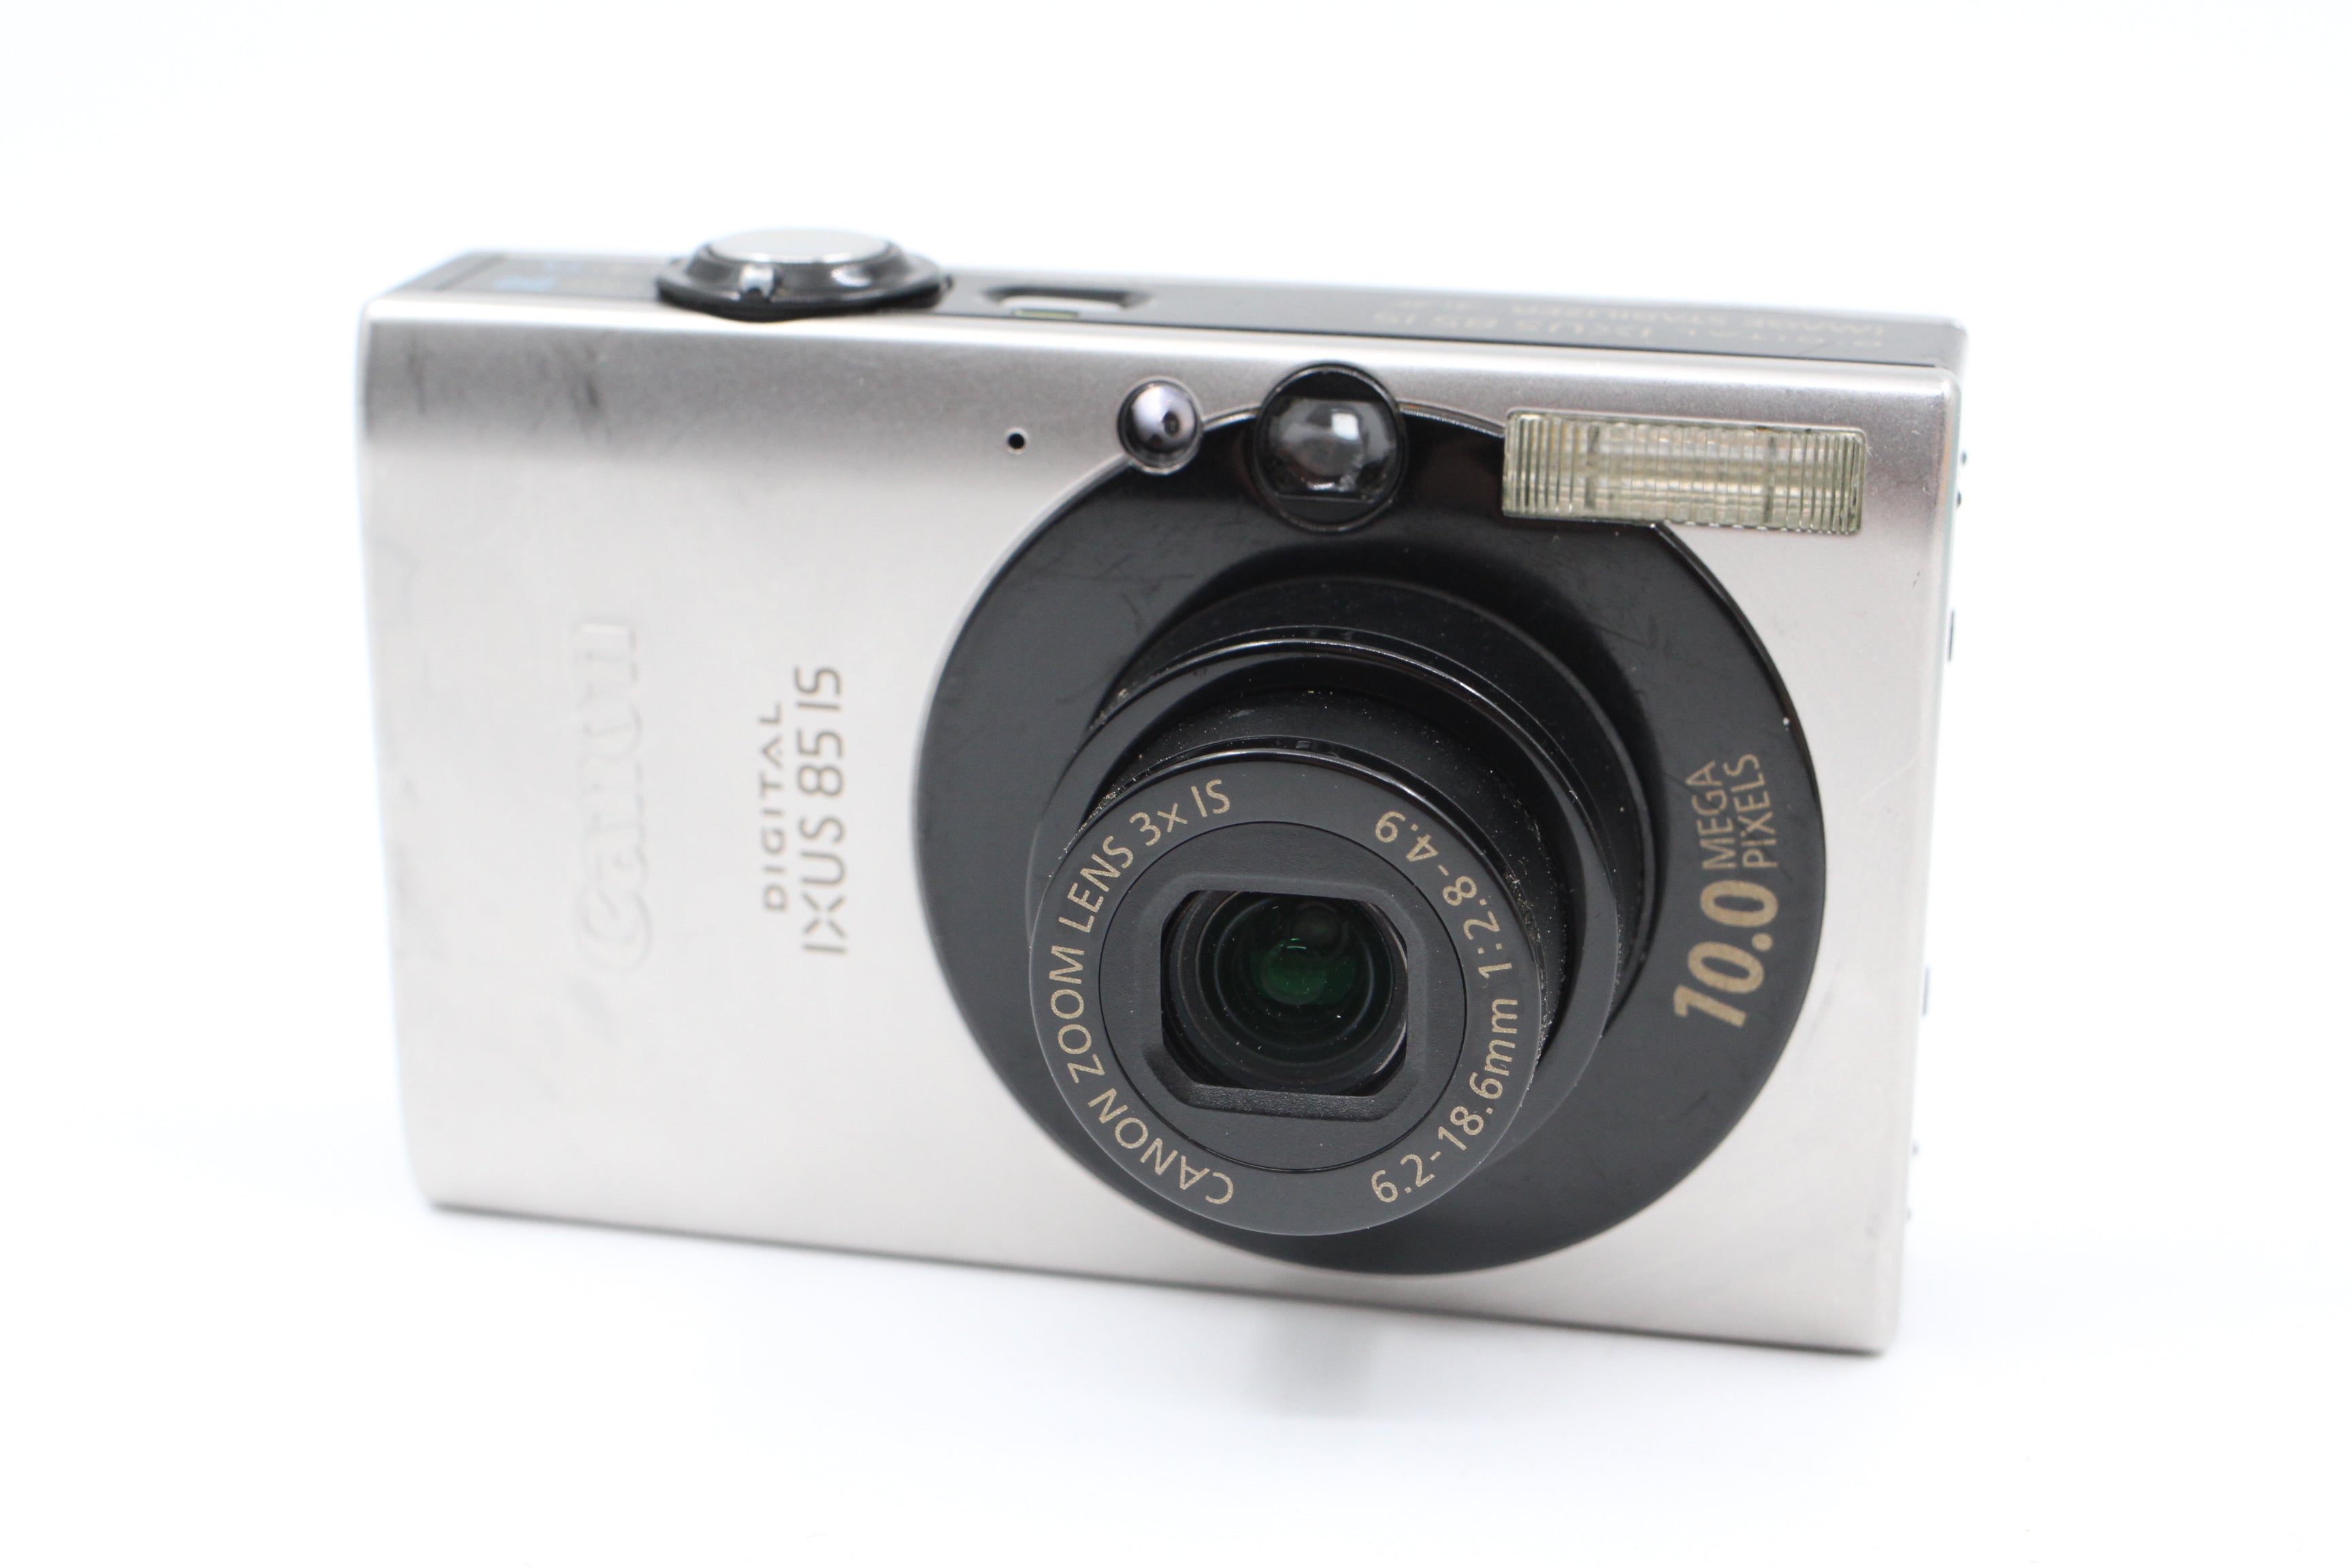 Canon IXUS 85 IS Digital Compact Camera, Boxed